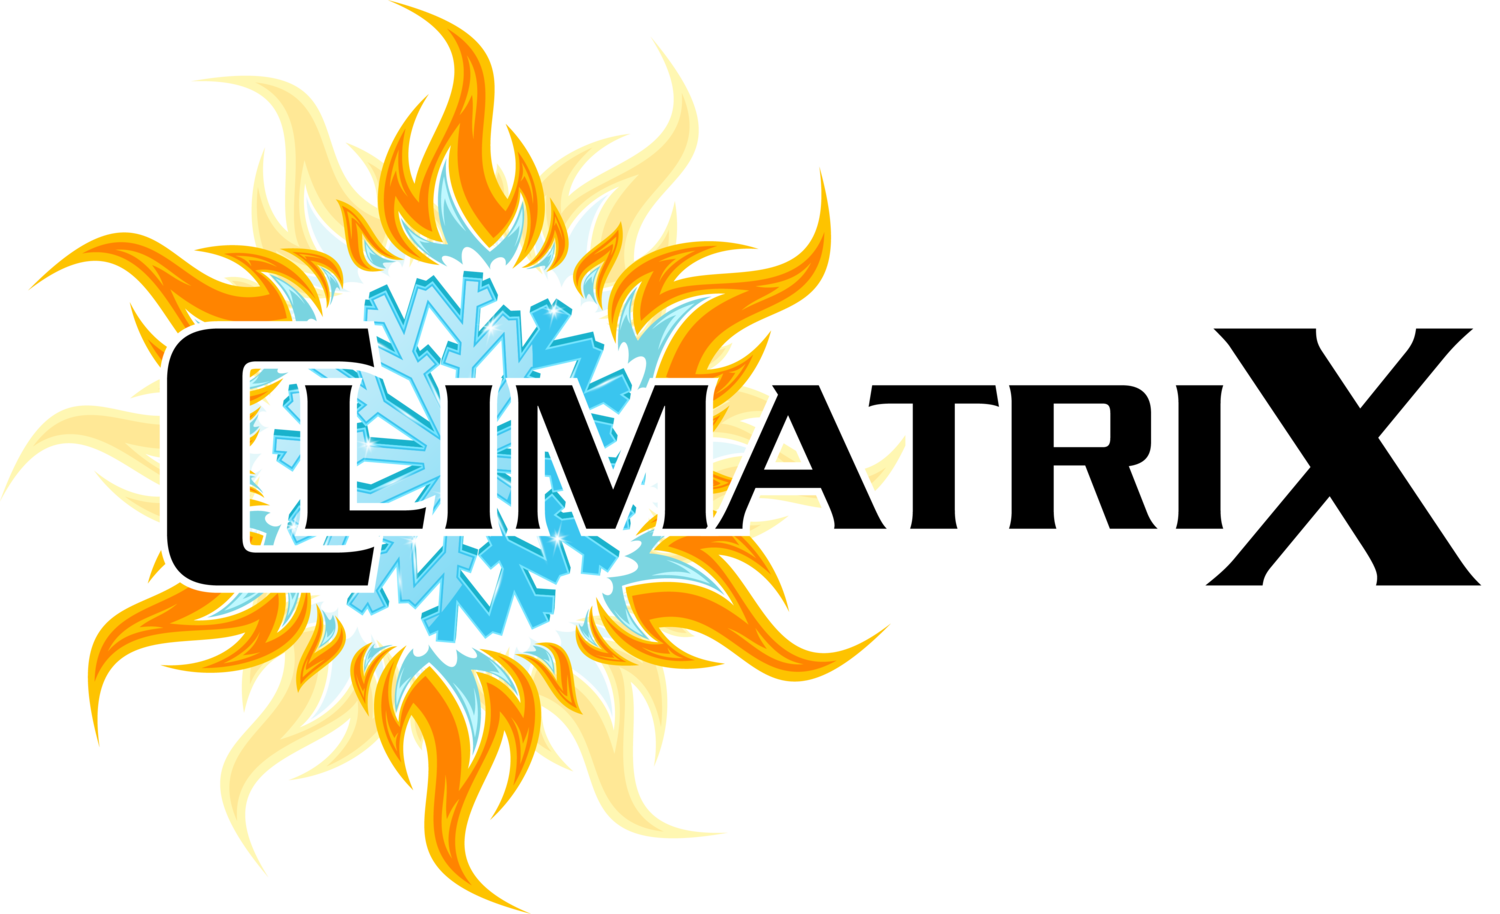 Climatrix Ltd.